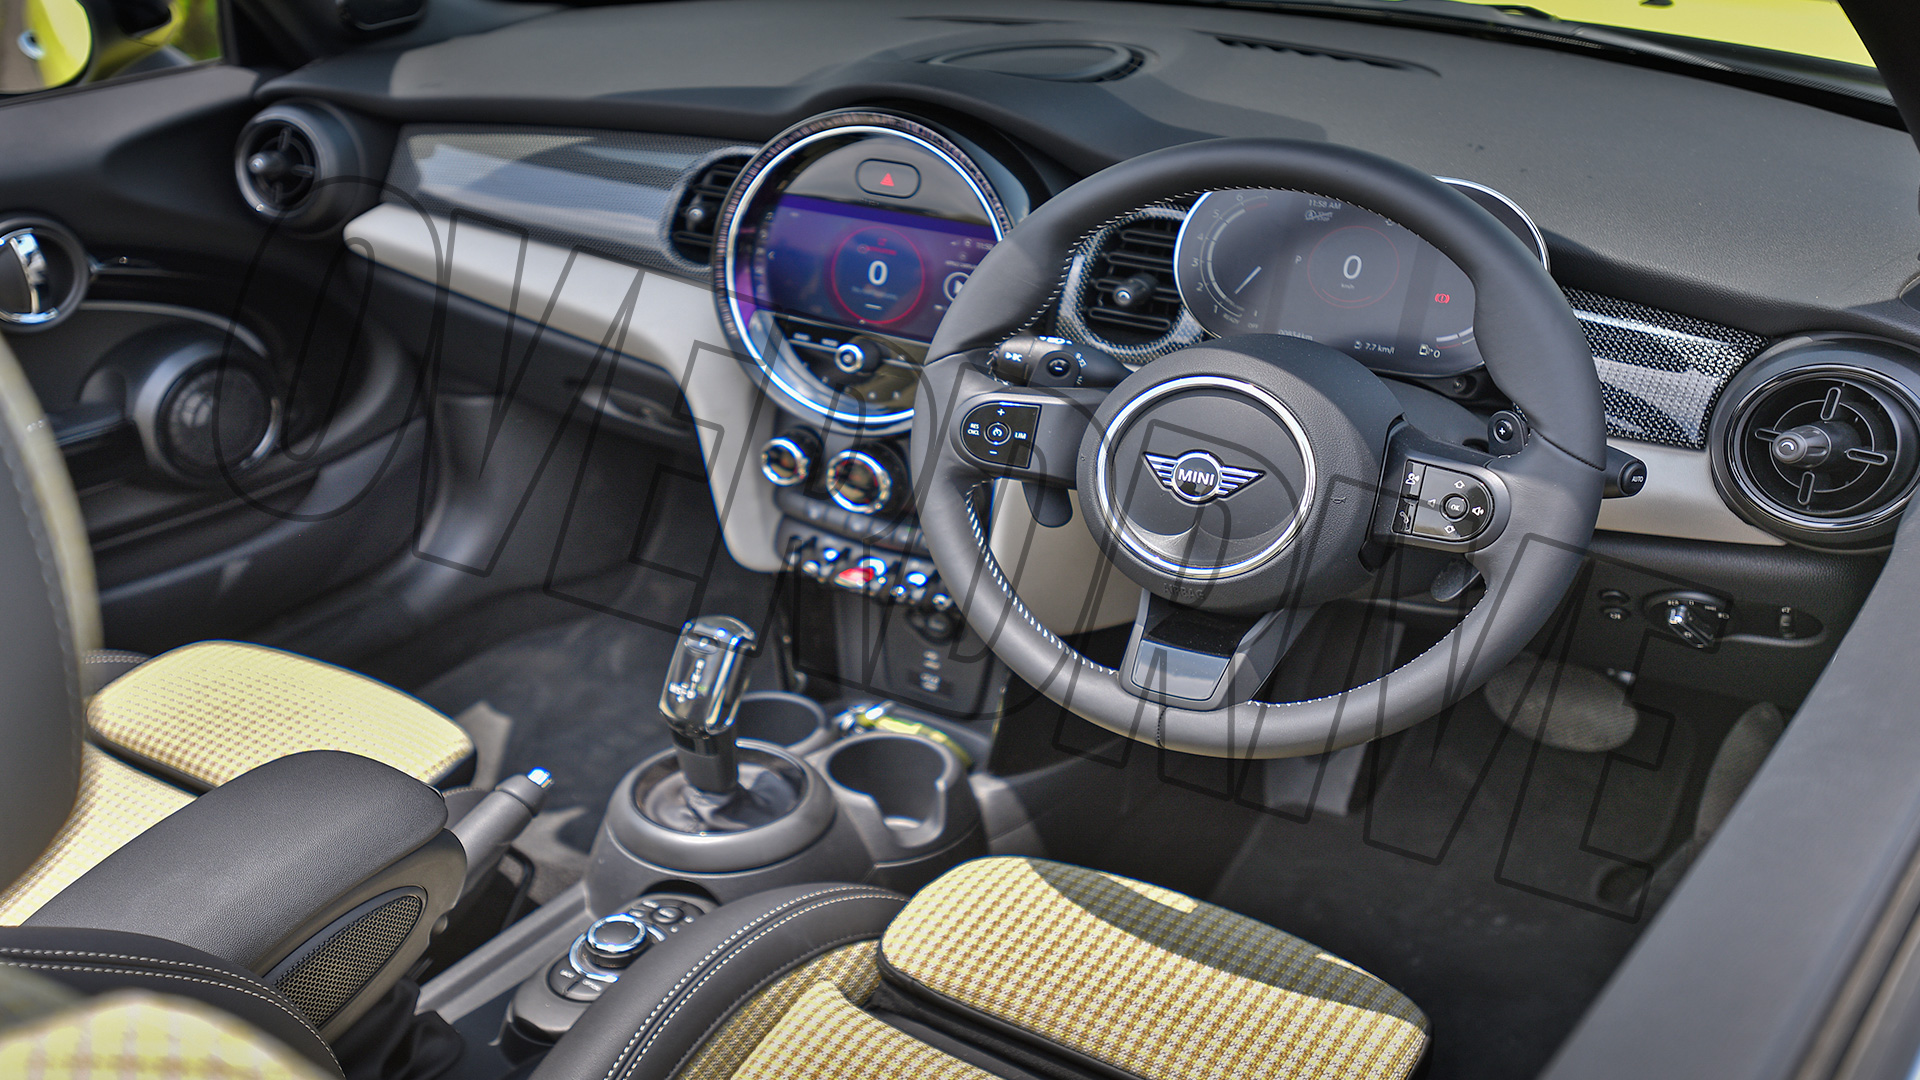 Mini Cooper S 2021 Convertible Interior Car Photos - Overdrive